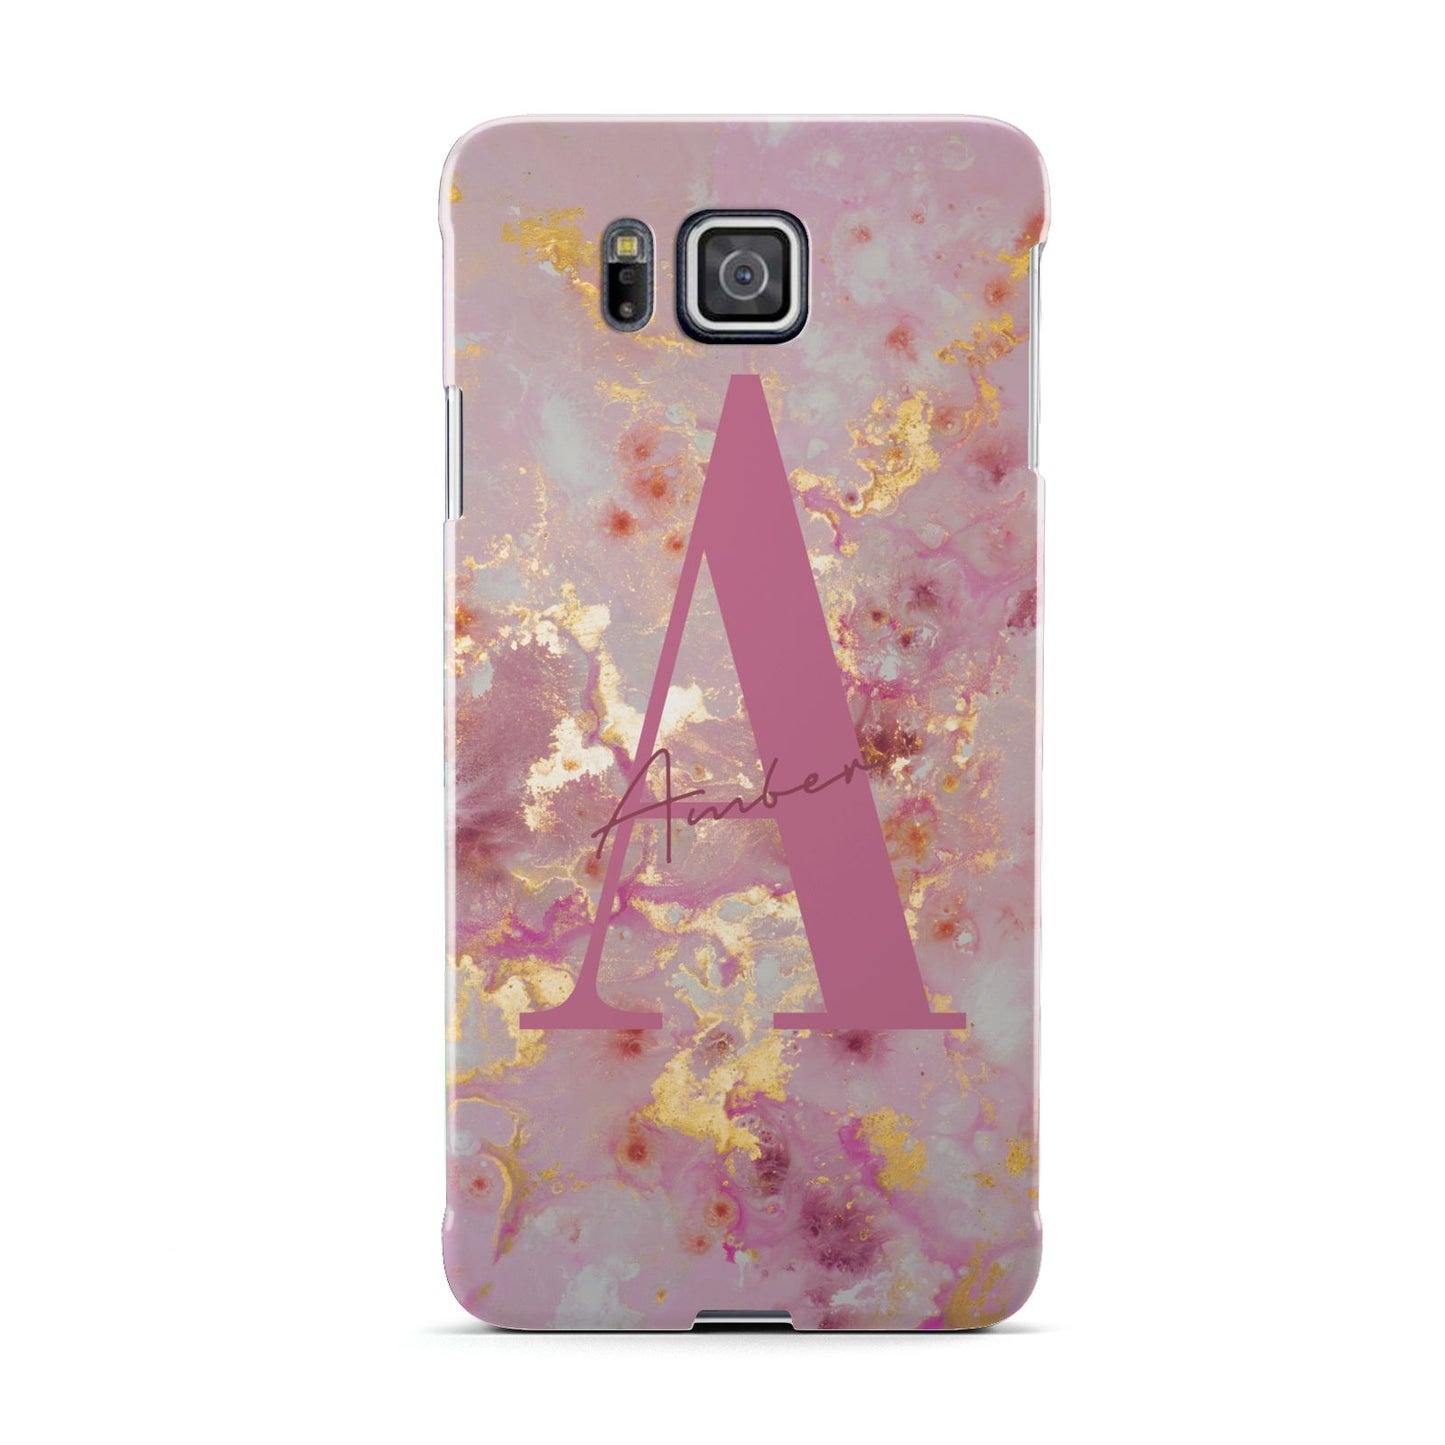 Monogrammed Pink Gold Marble Samsung Galaxy Alpha Case